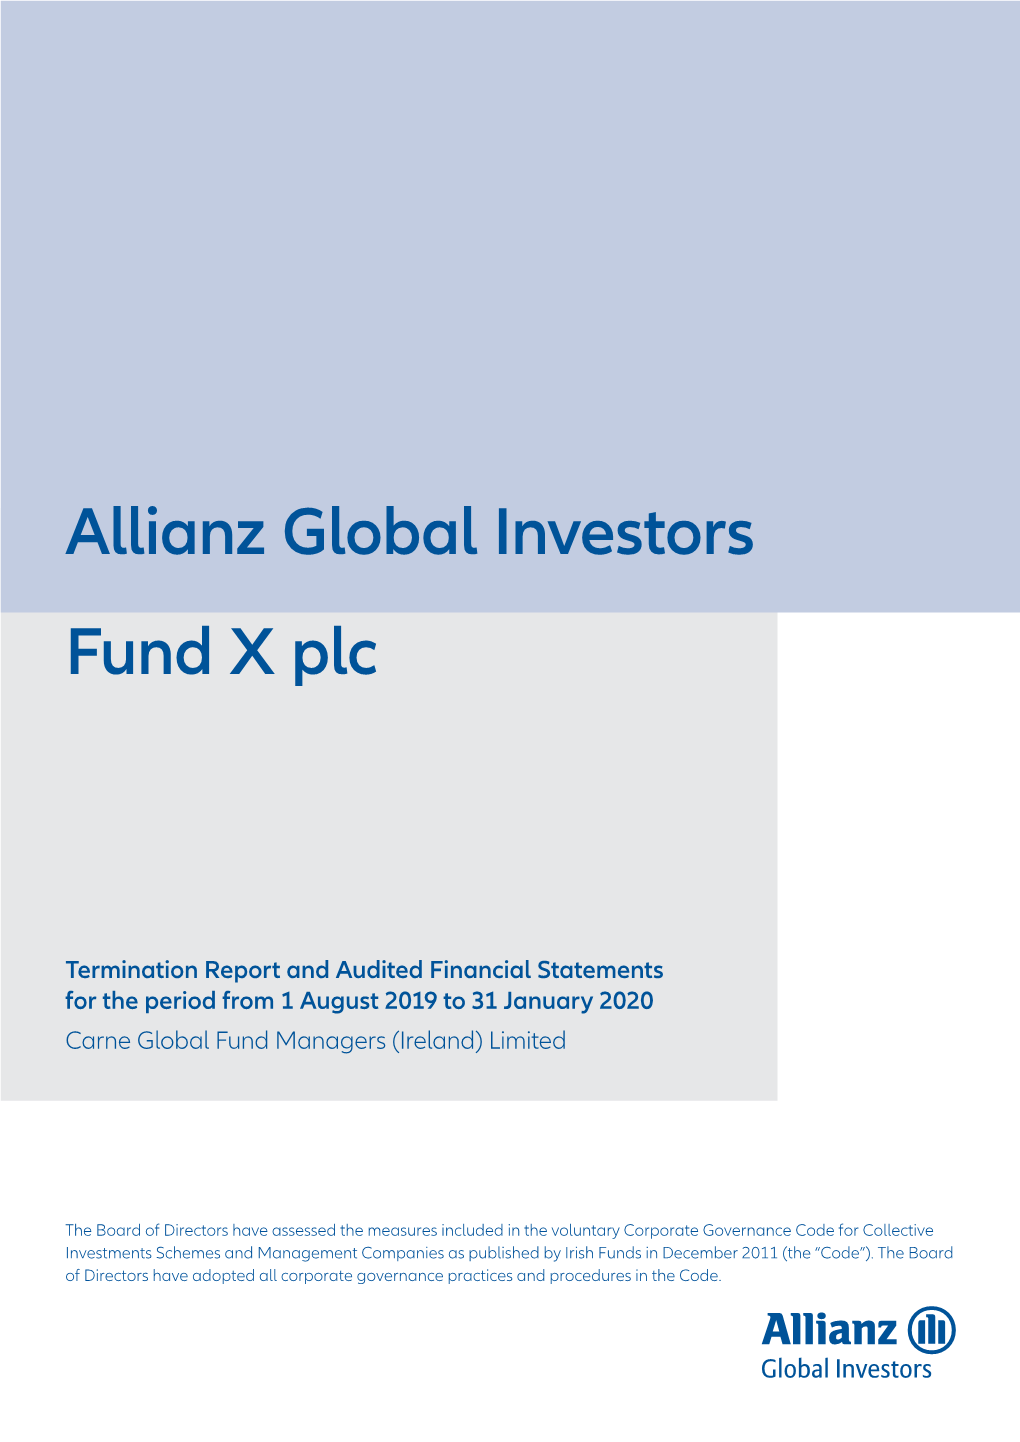 Allianz Global Investors Fund X Plc